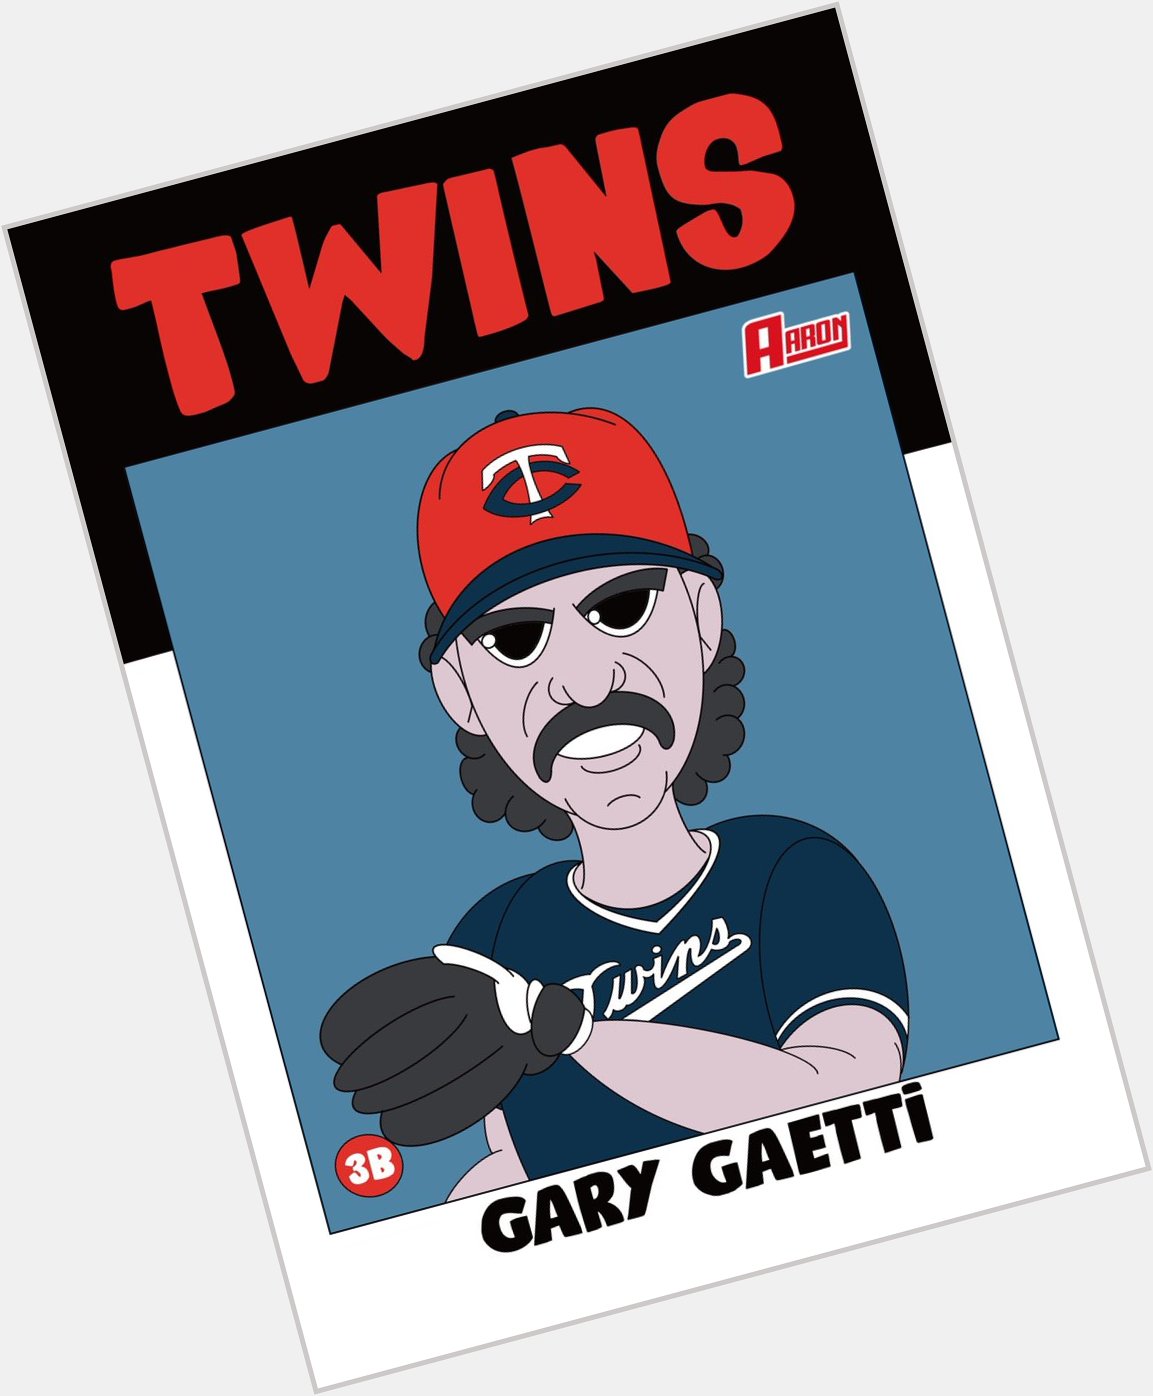 Happy Birthday to Twins great Gary Gaetti. 